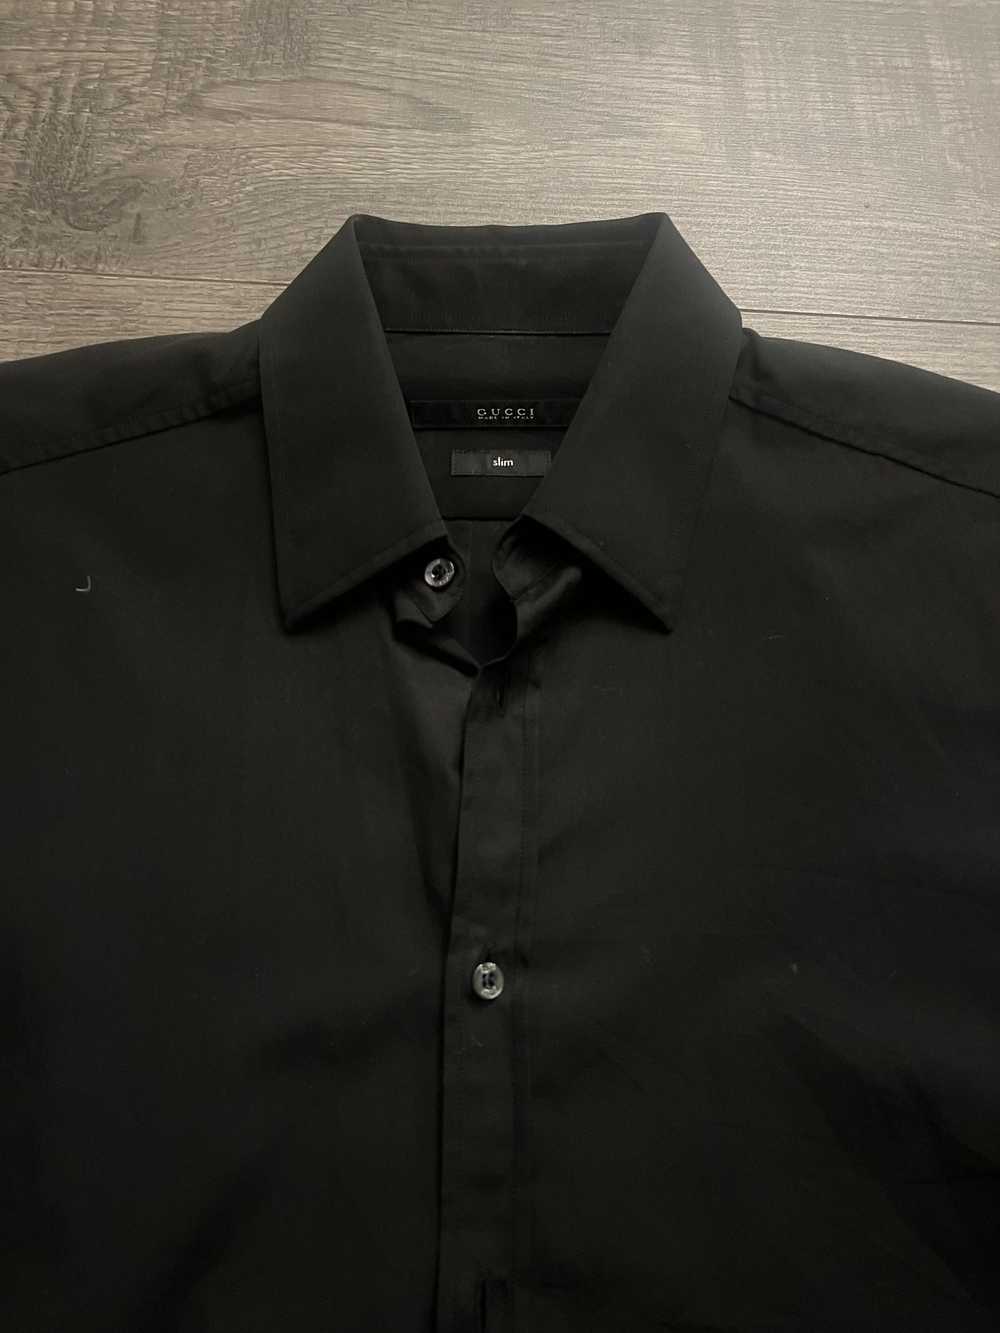 Gucci Black dress shirt slim small 38 / 15 - image 2